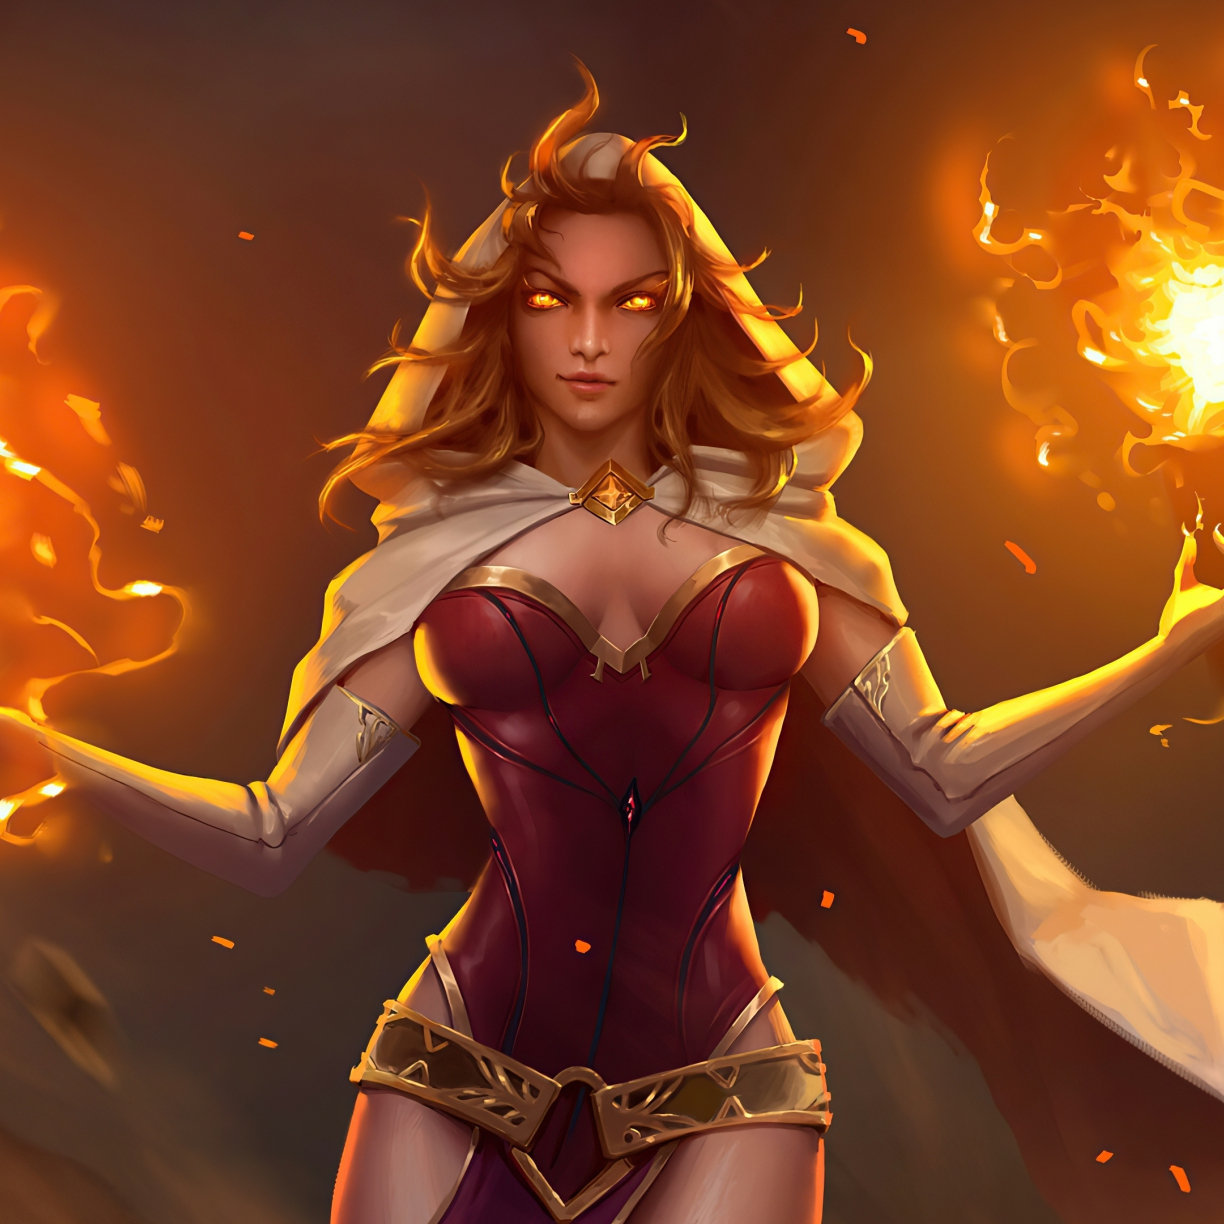 fantasy fire queen